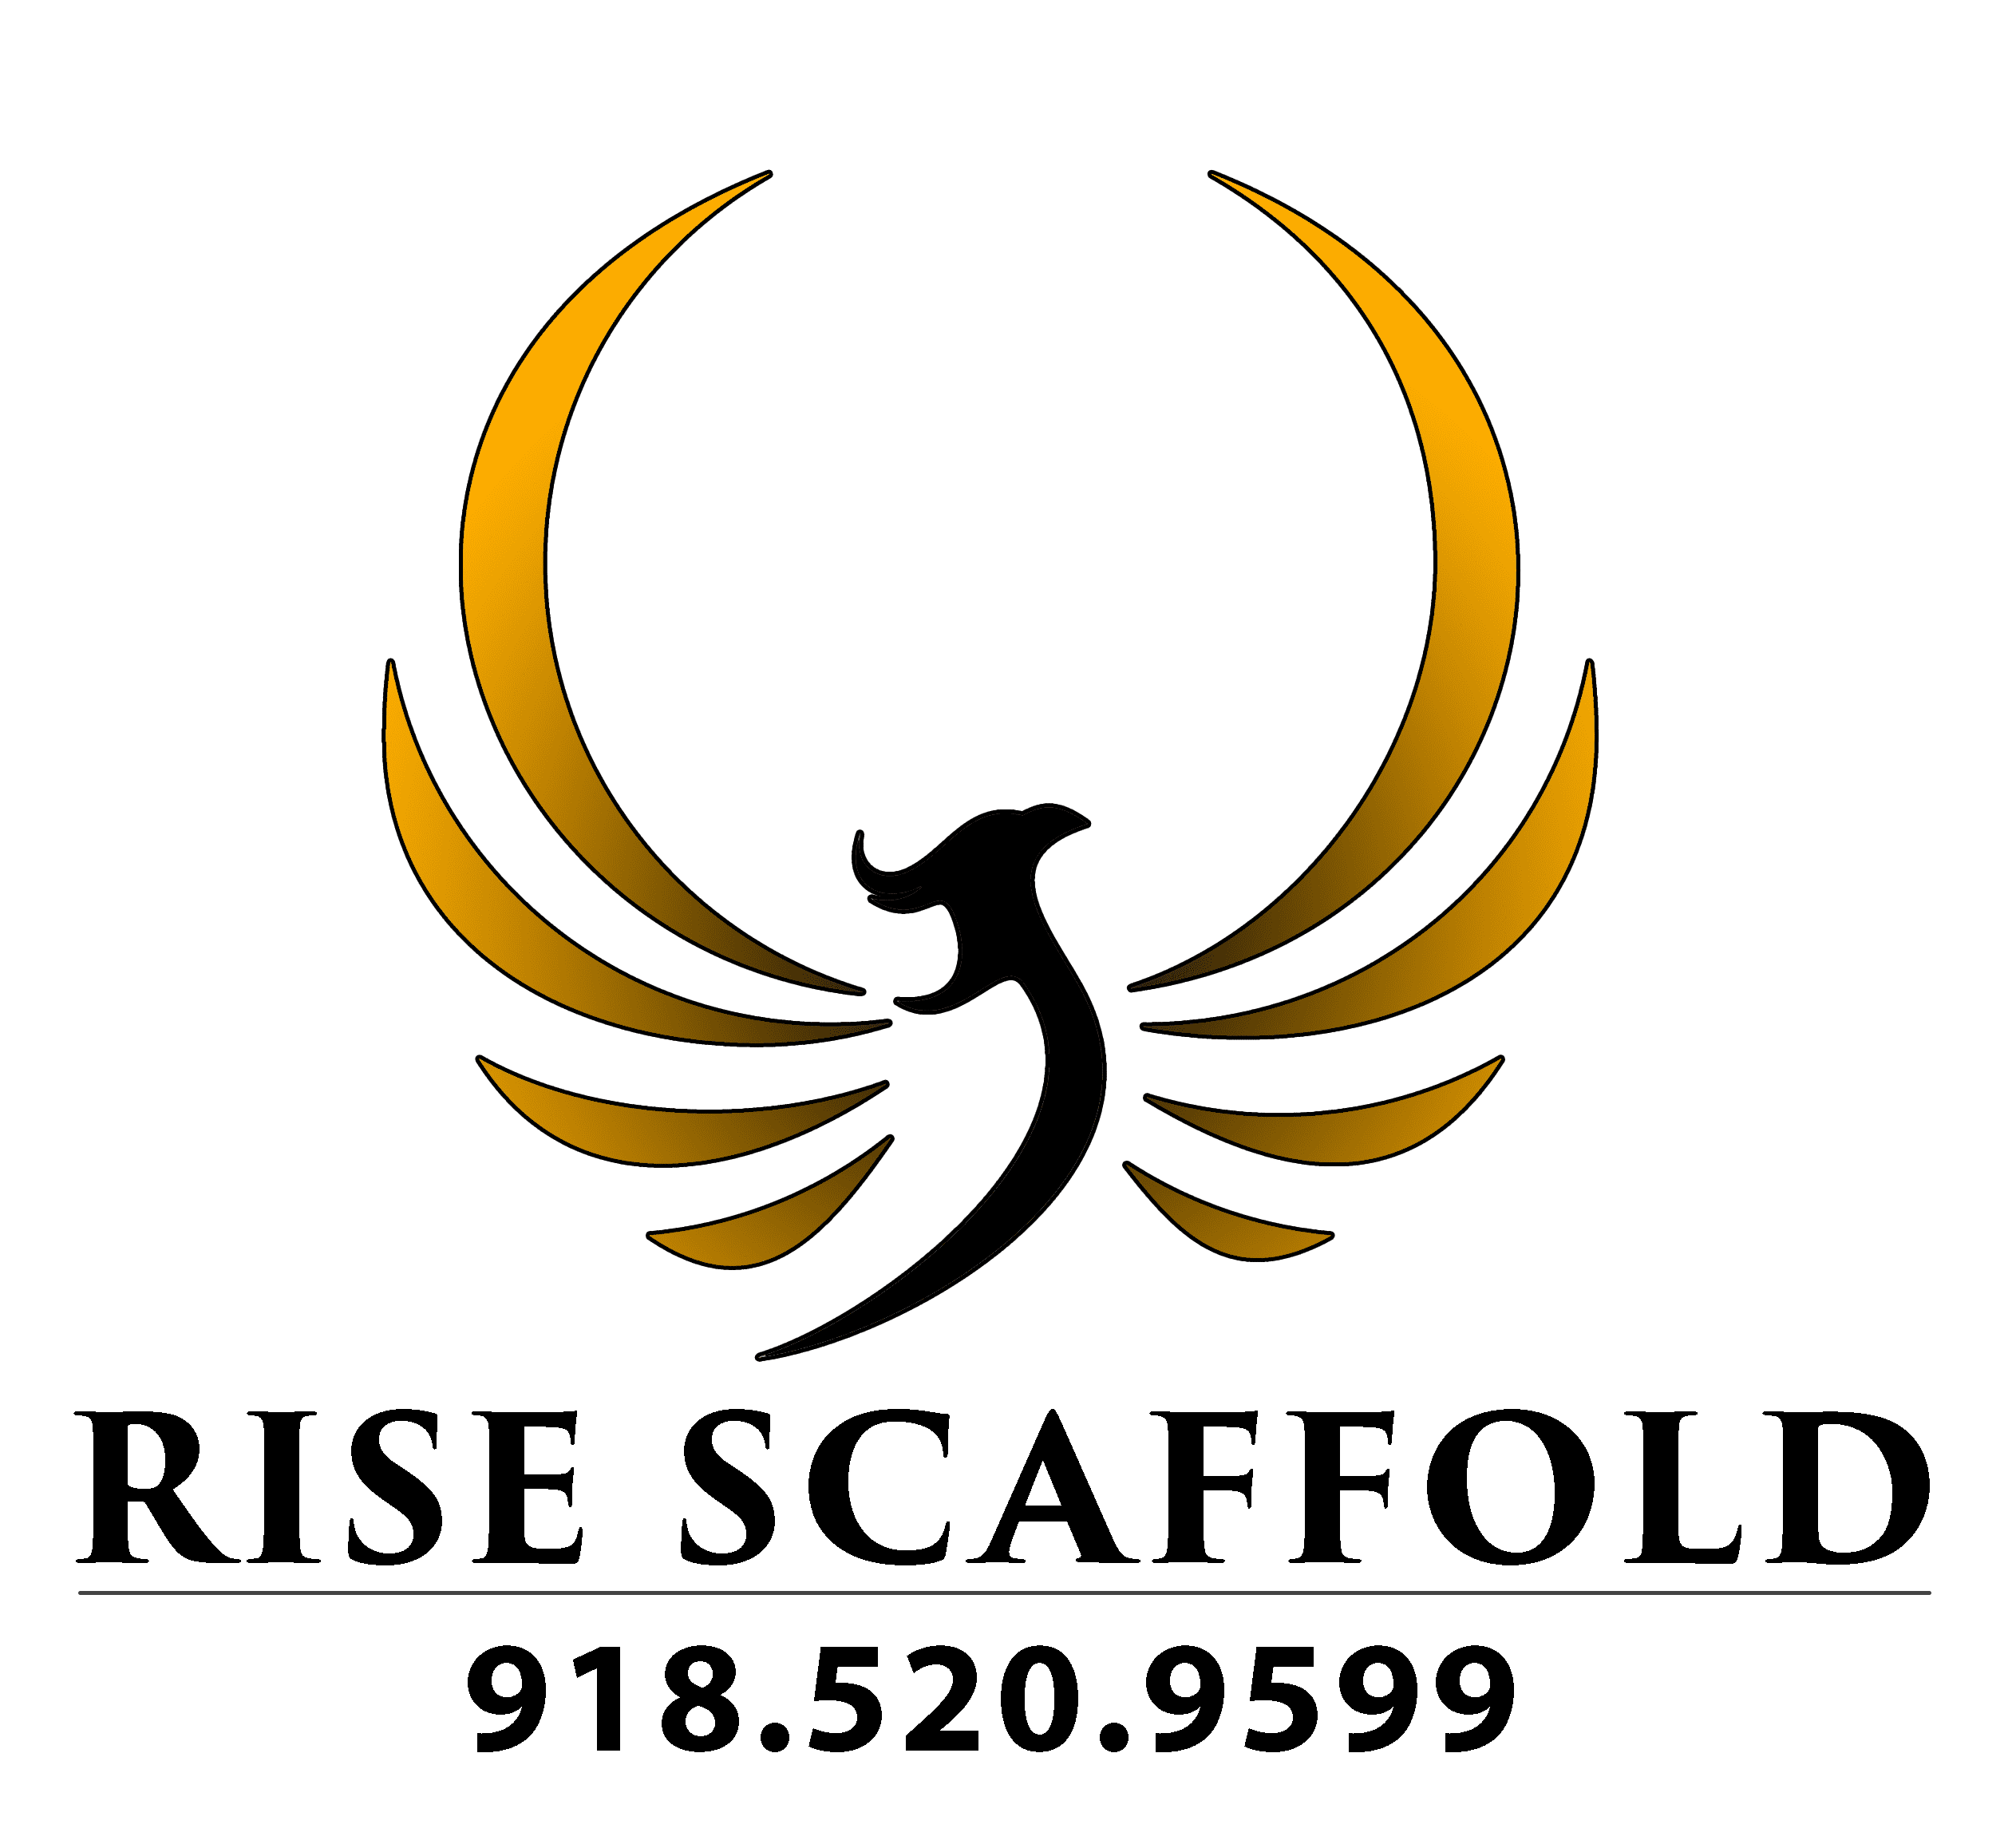 A logo of rise scaffold